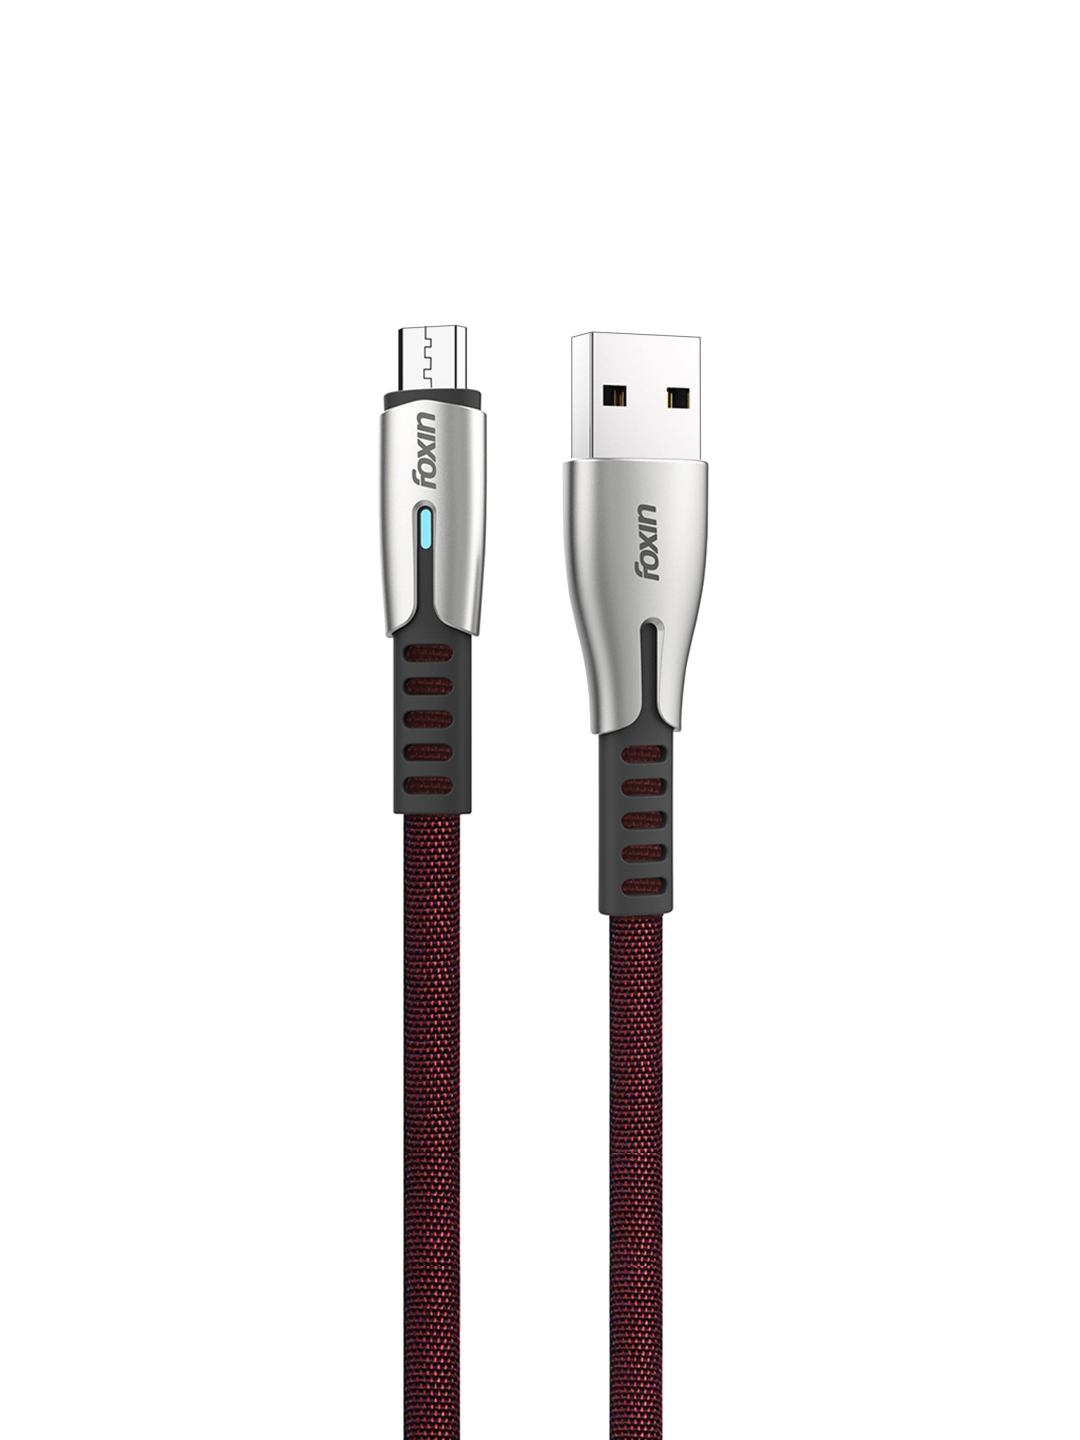 Foxin MU405 LED Zinc Alloy Fabric Braided Micro USB Cable 